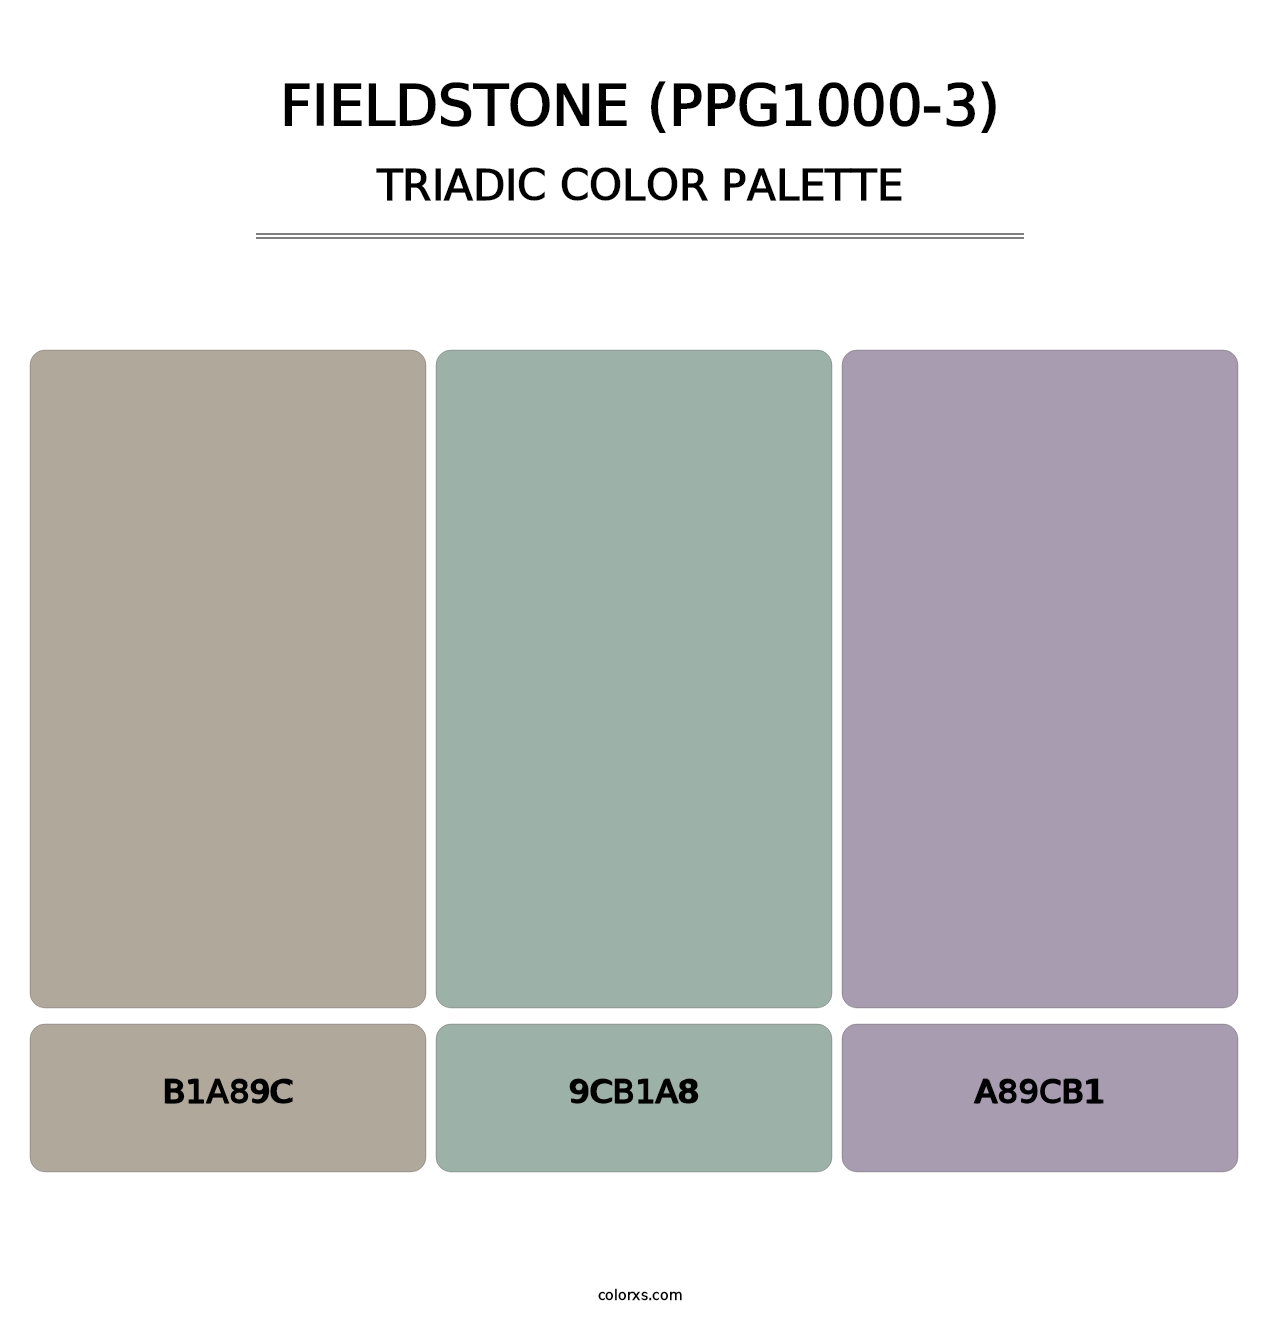 Fieldstone (PPG1000-3) - Triadic Color Palette